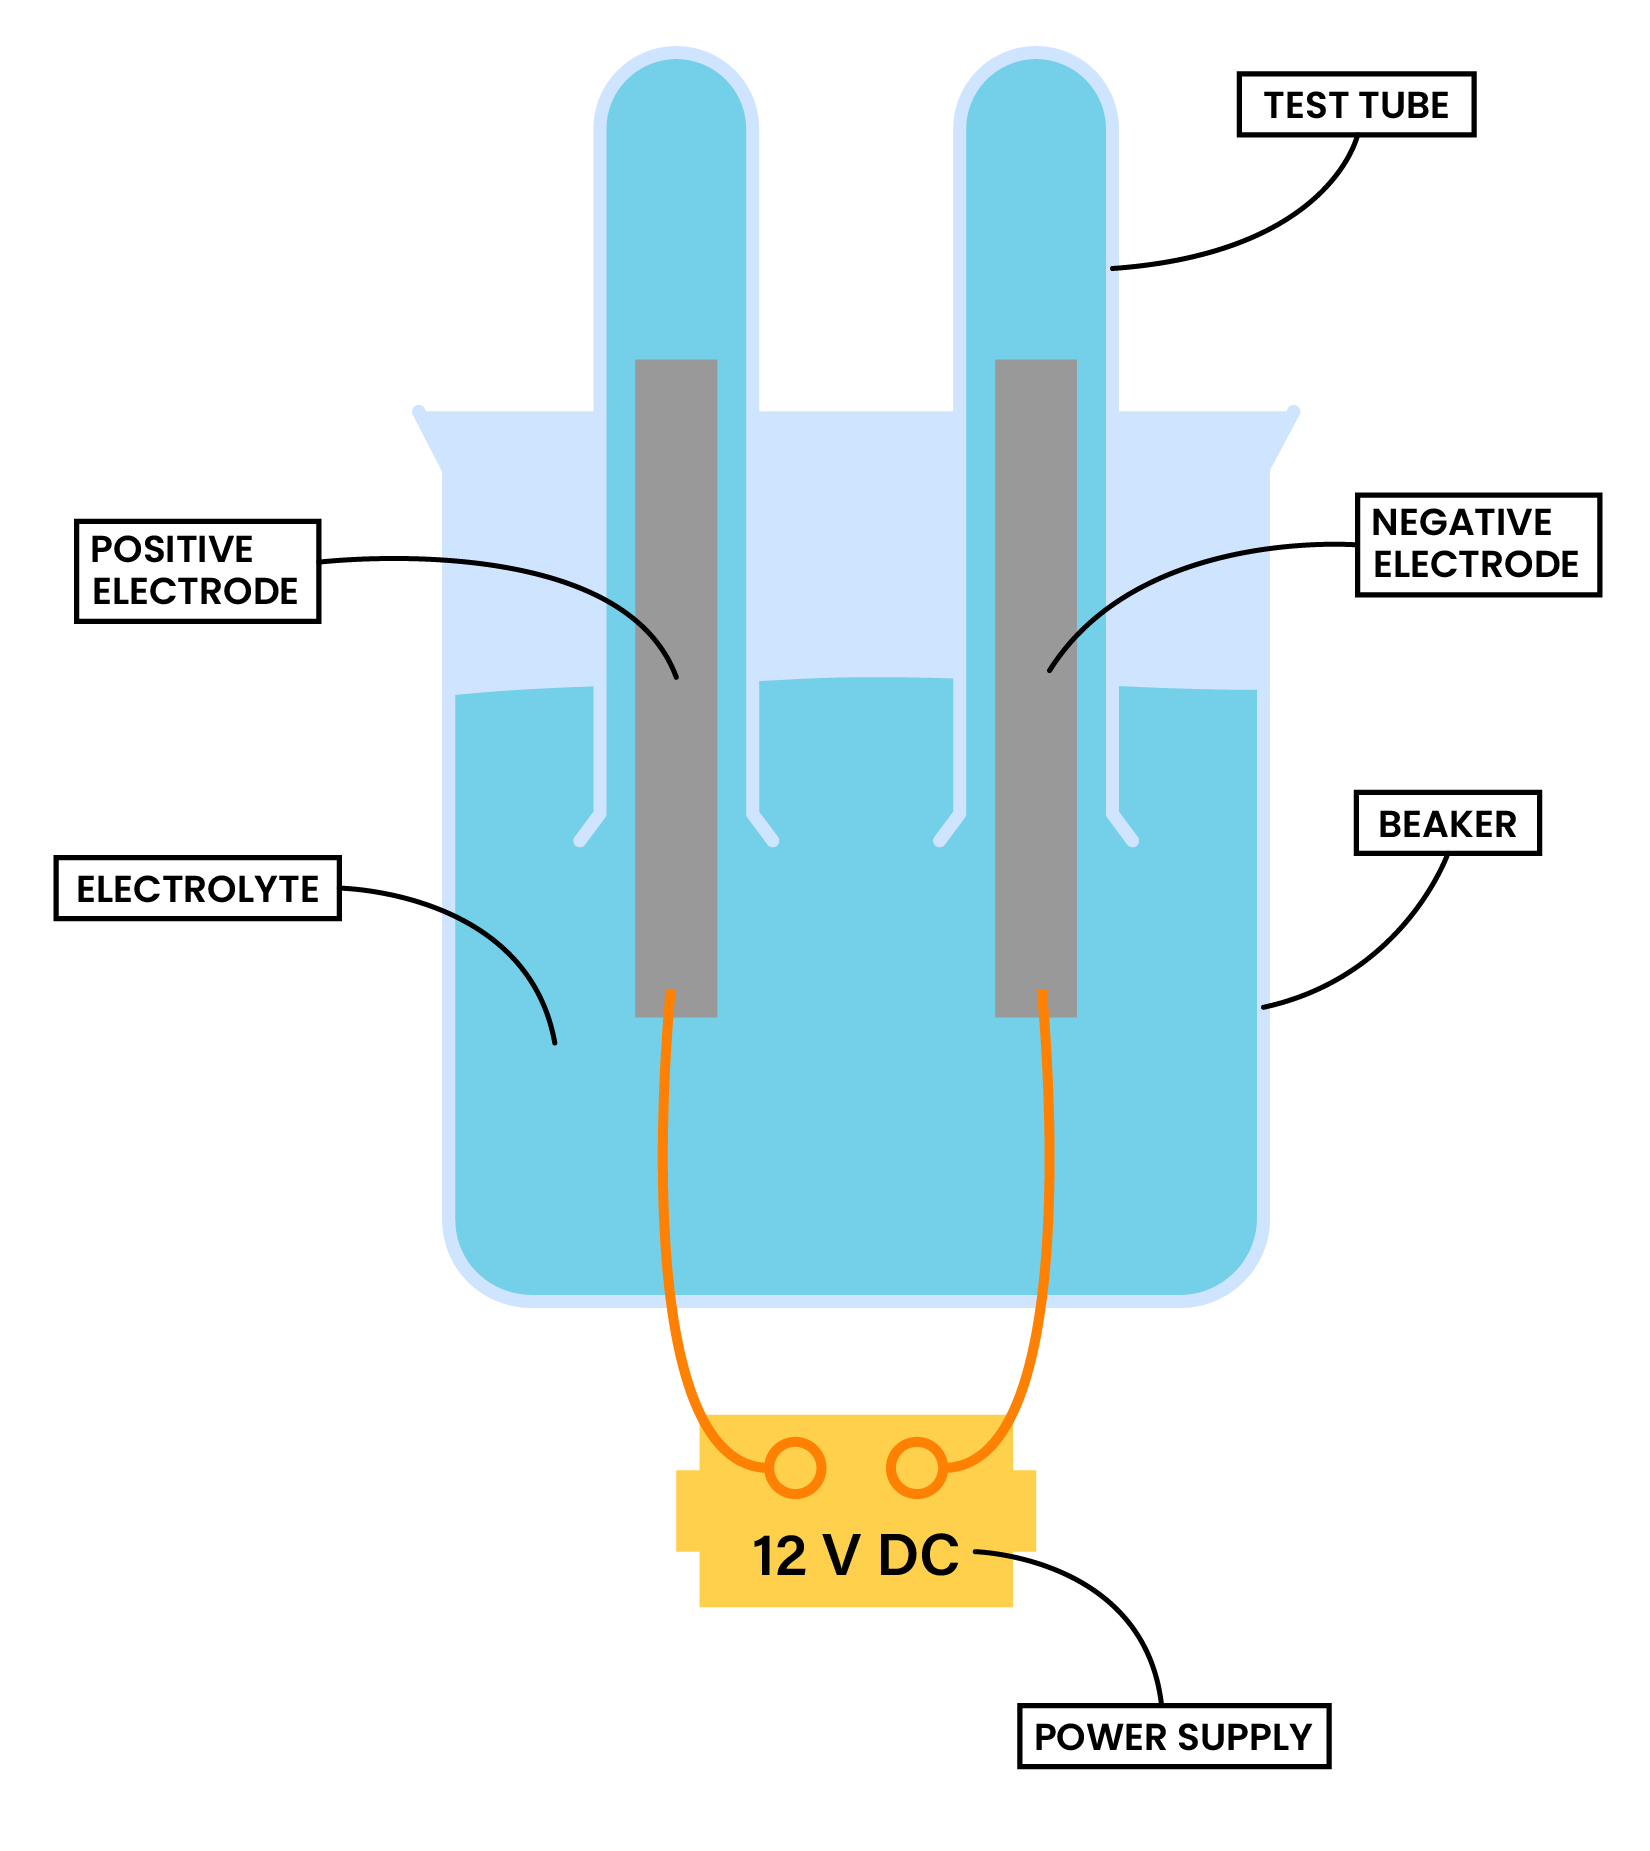 edexcel_igcse_chemistry_topic 09_electrolysis_003_electrolysis diagram labelled apparatus set up